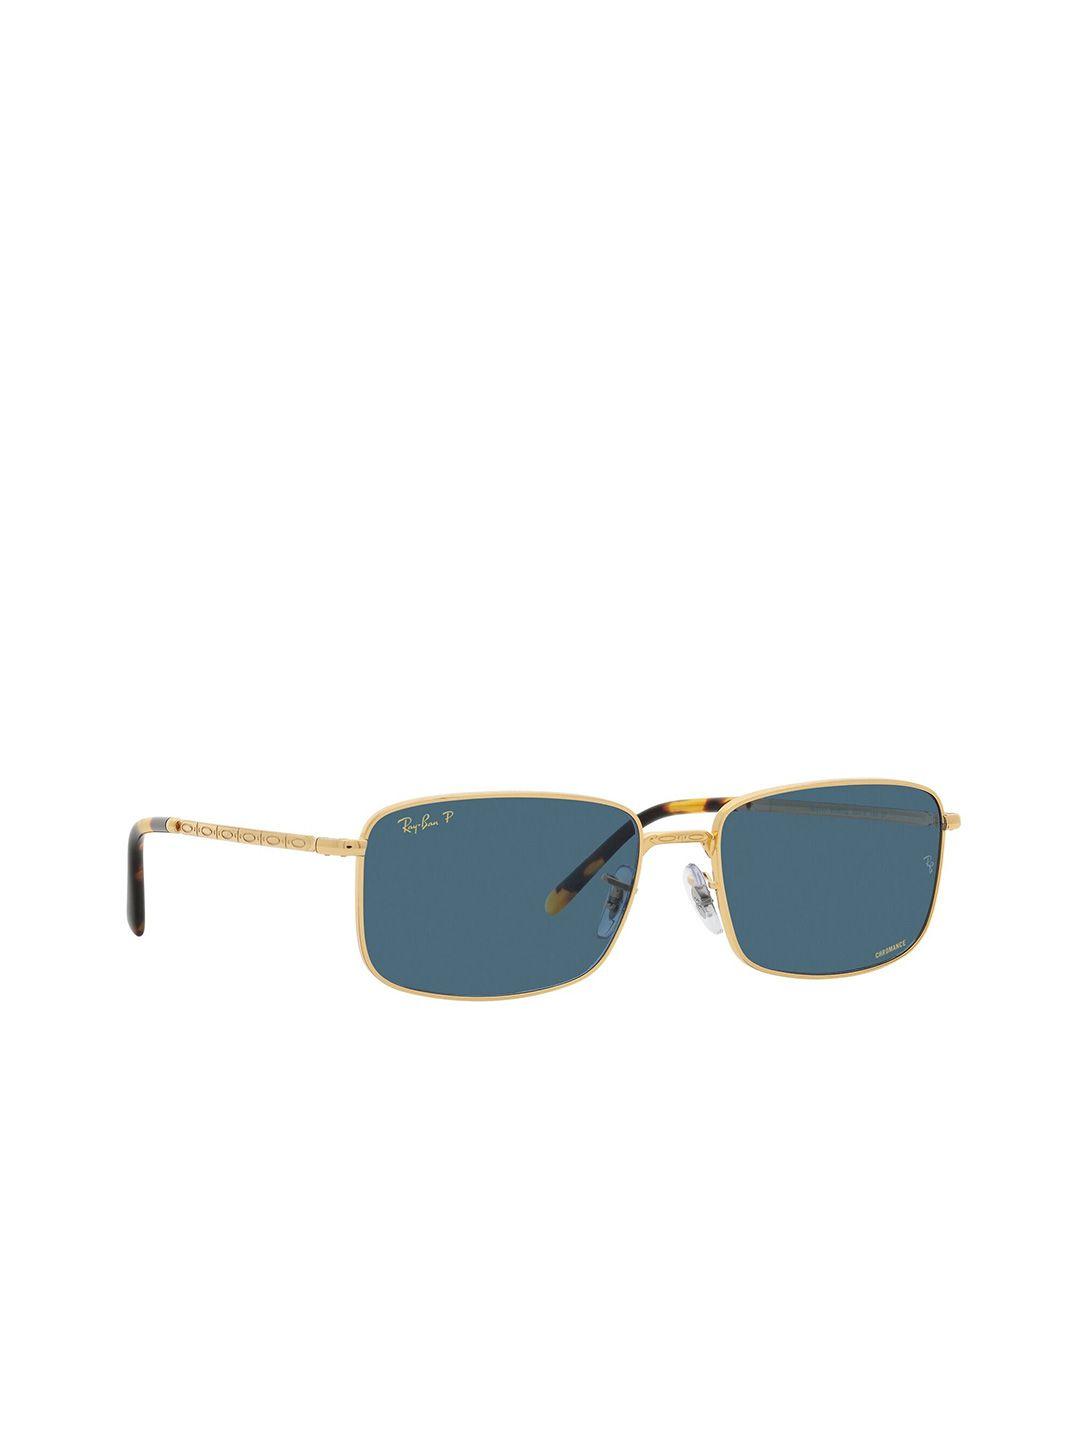 ray-ban unisex rectangle sunglasses with polarised lens 8056597835756